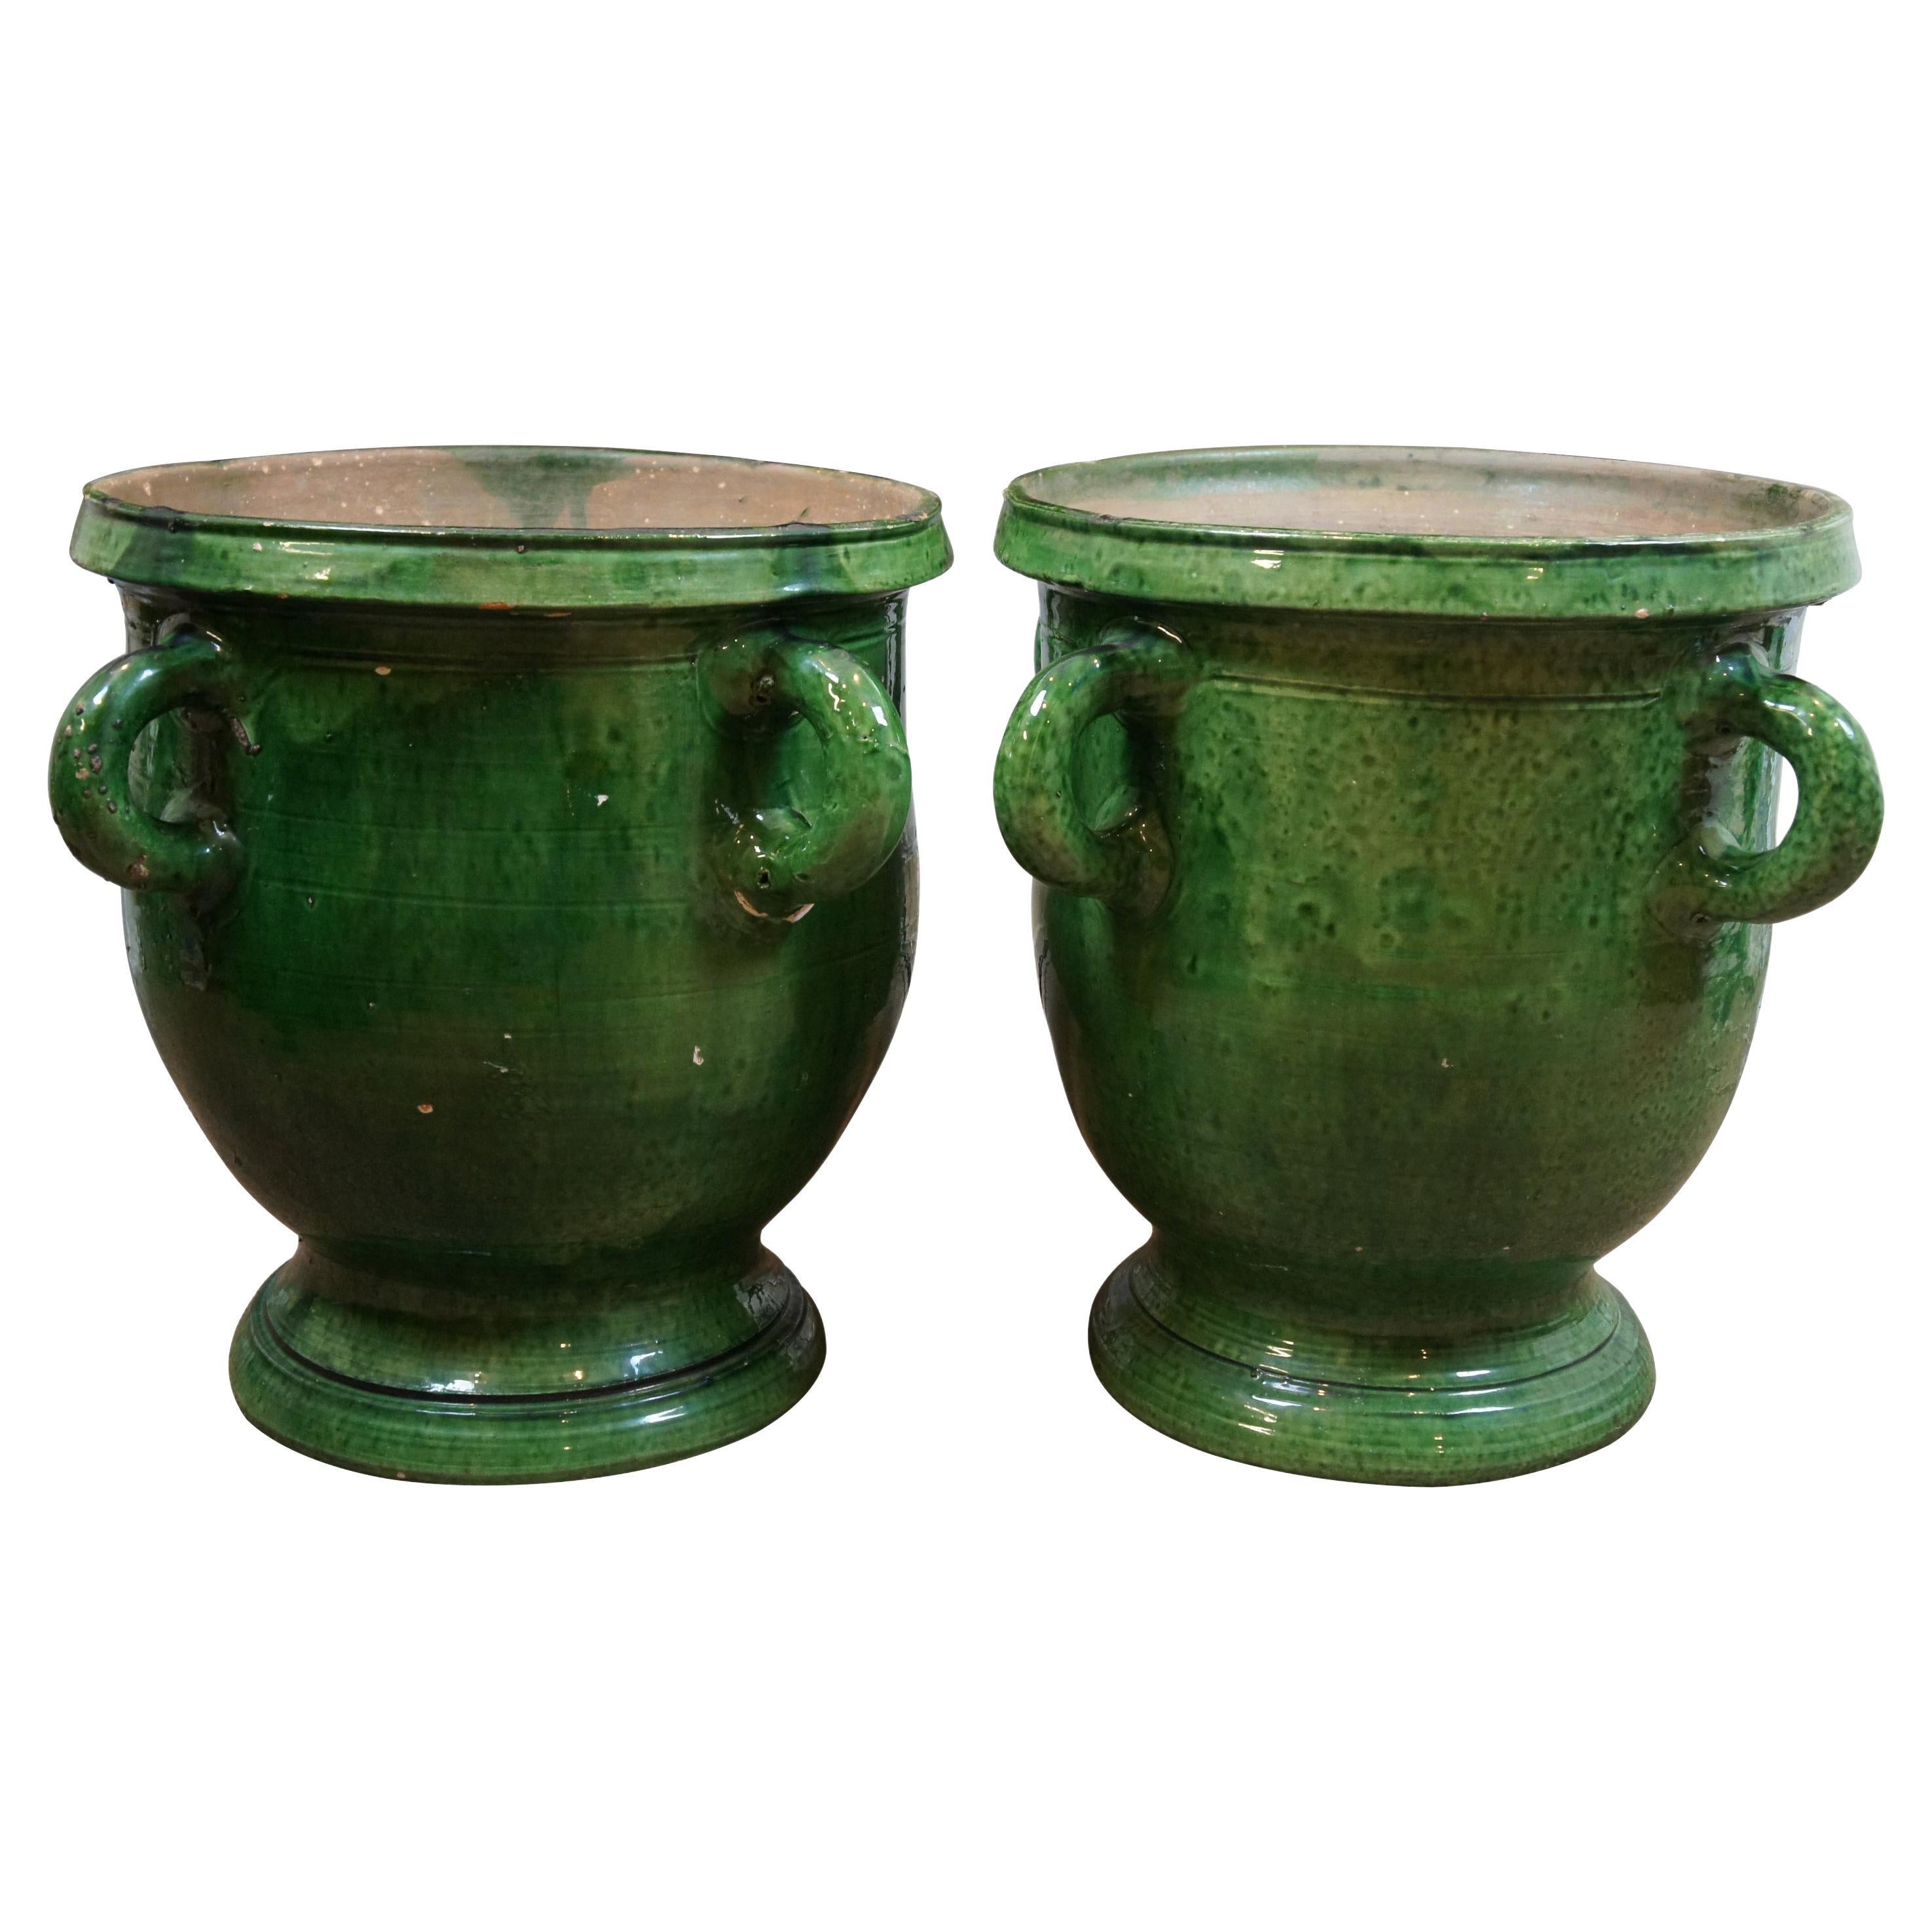 2 Antique French Anduze Castelnaudary Glazed Terracotta Garden Planters Urns